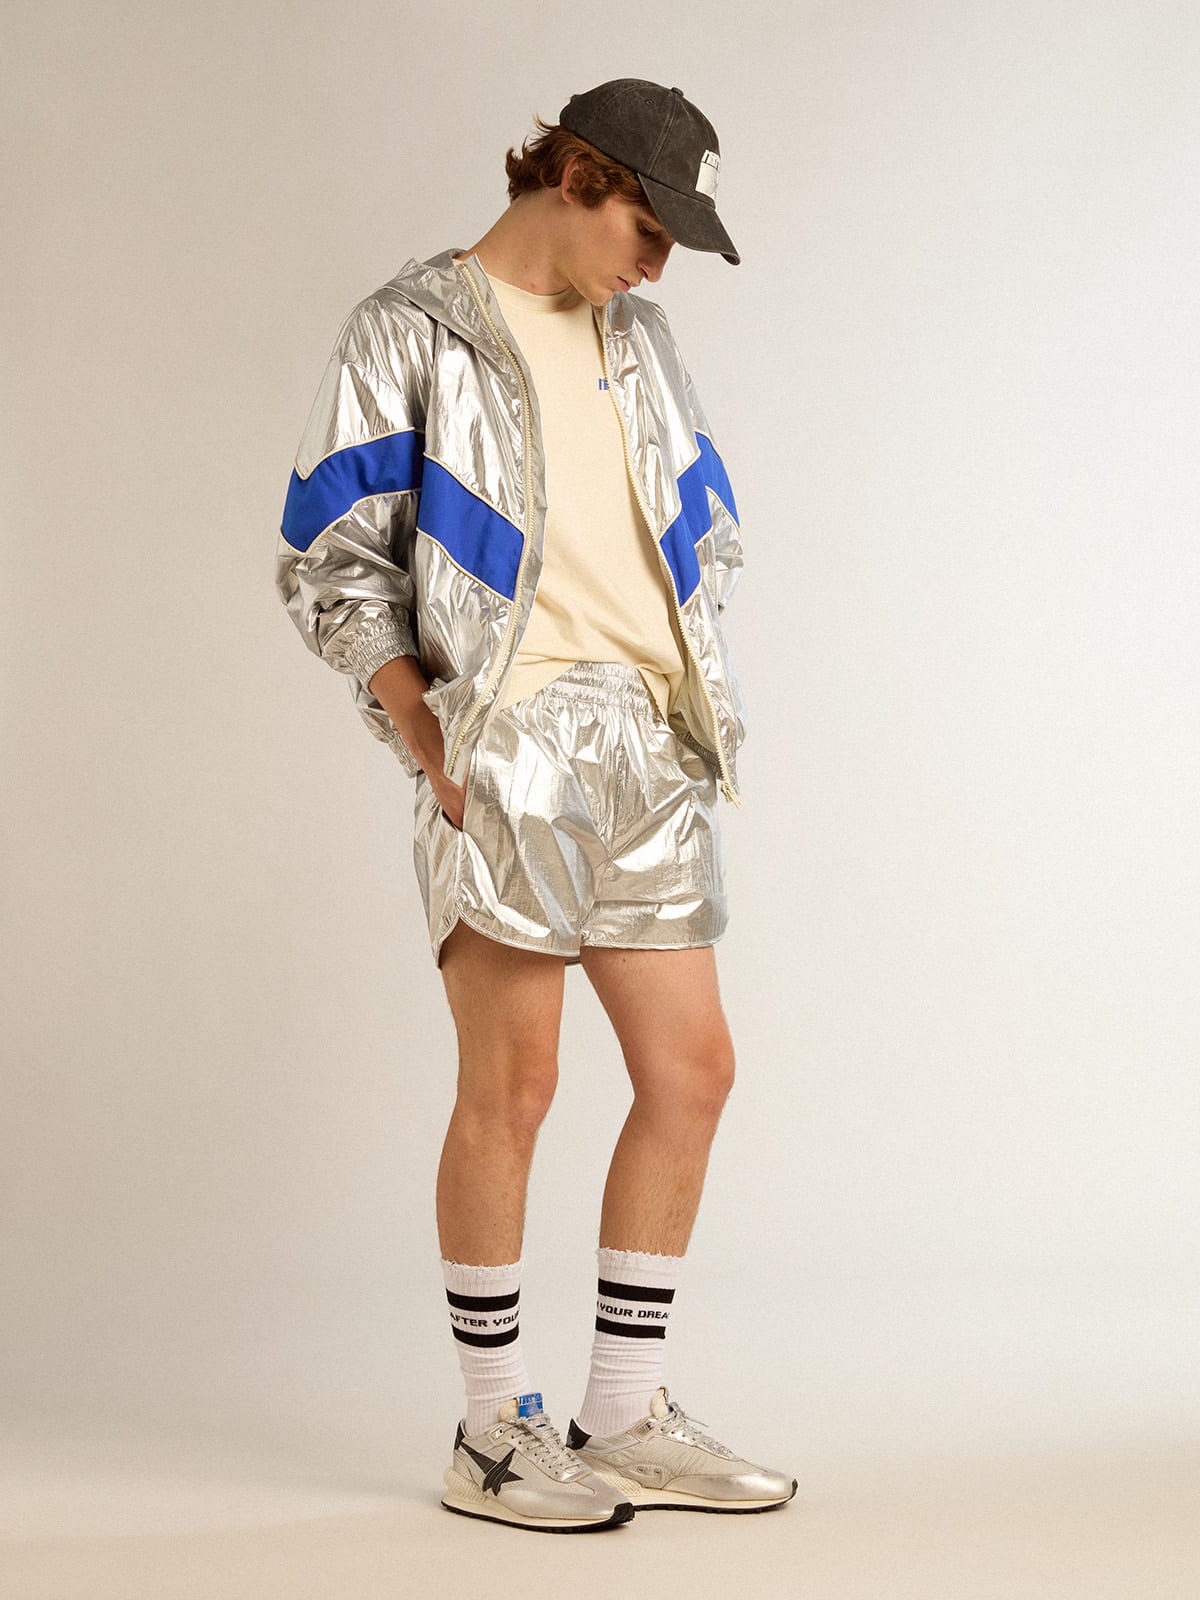 Golden Goose - Men's running shorts in silver fabric in 